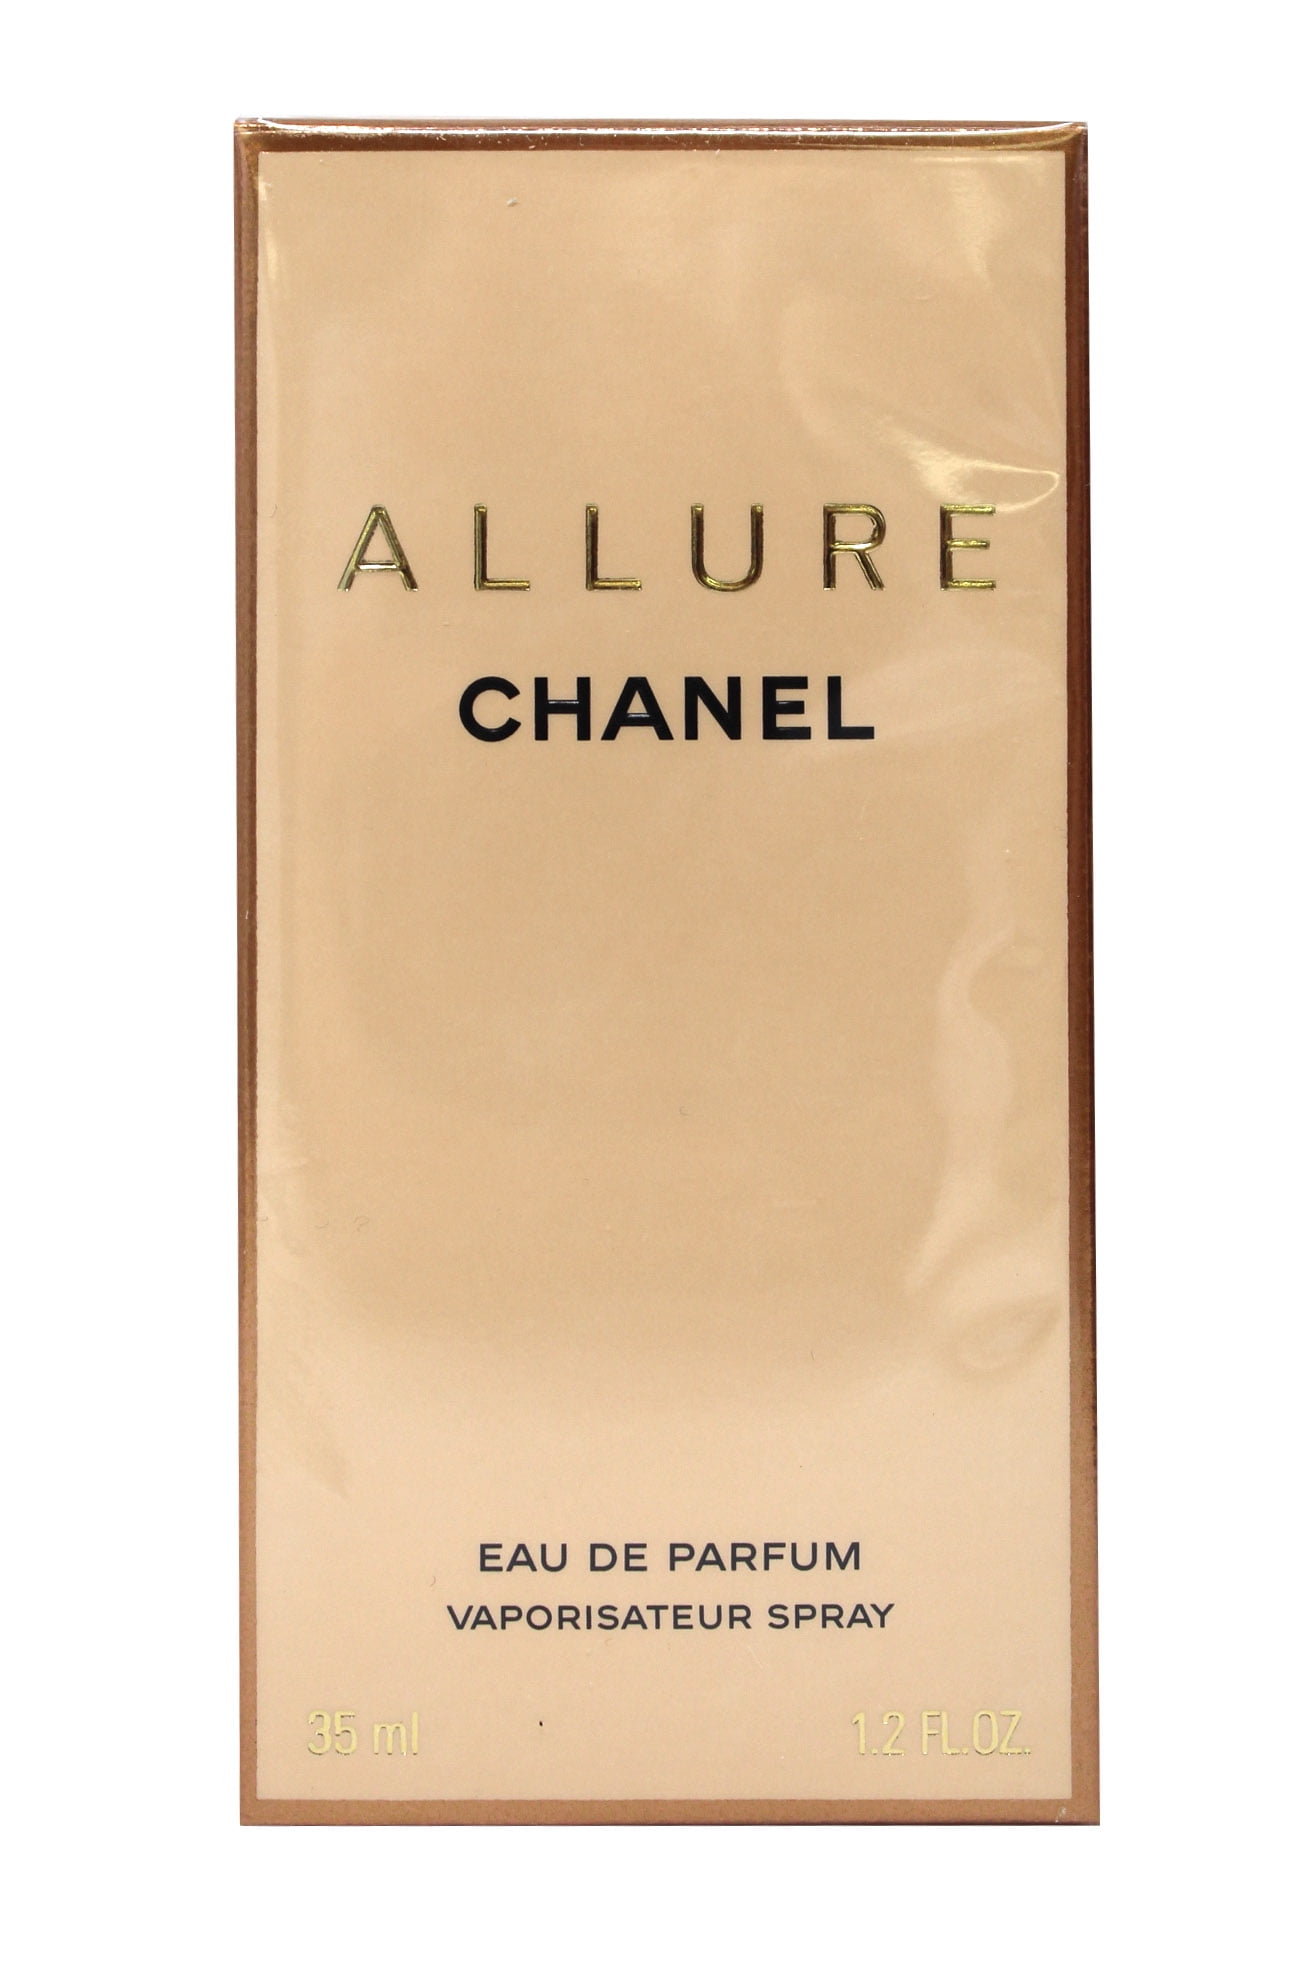 Allure Eau Parfum 1.2 Ounce - Walmart.com